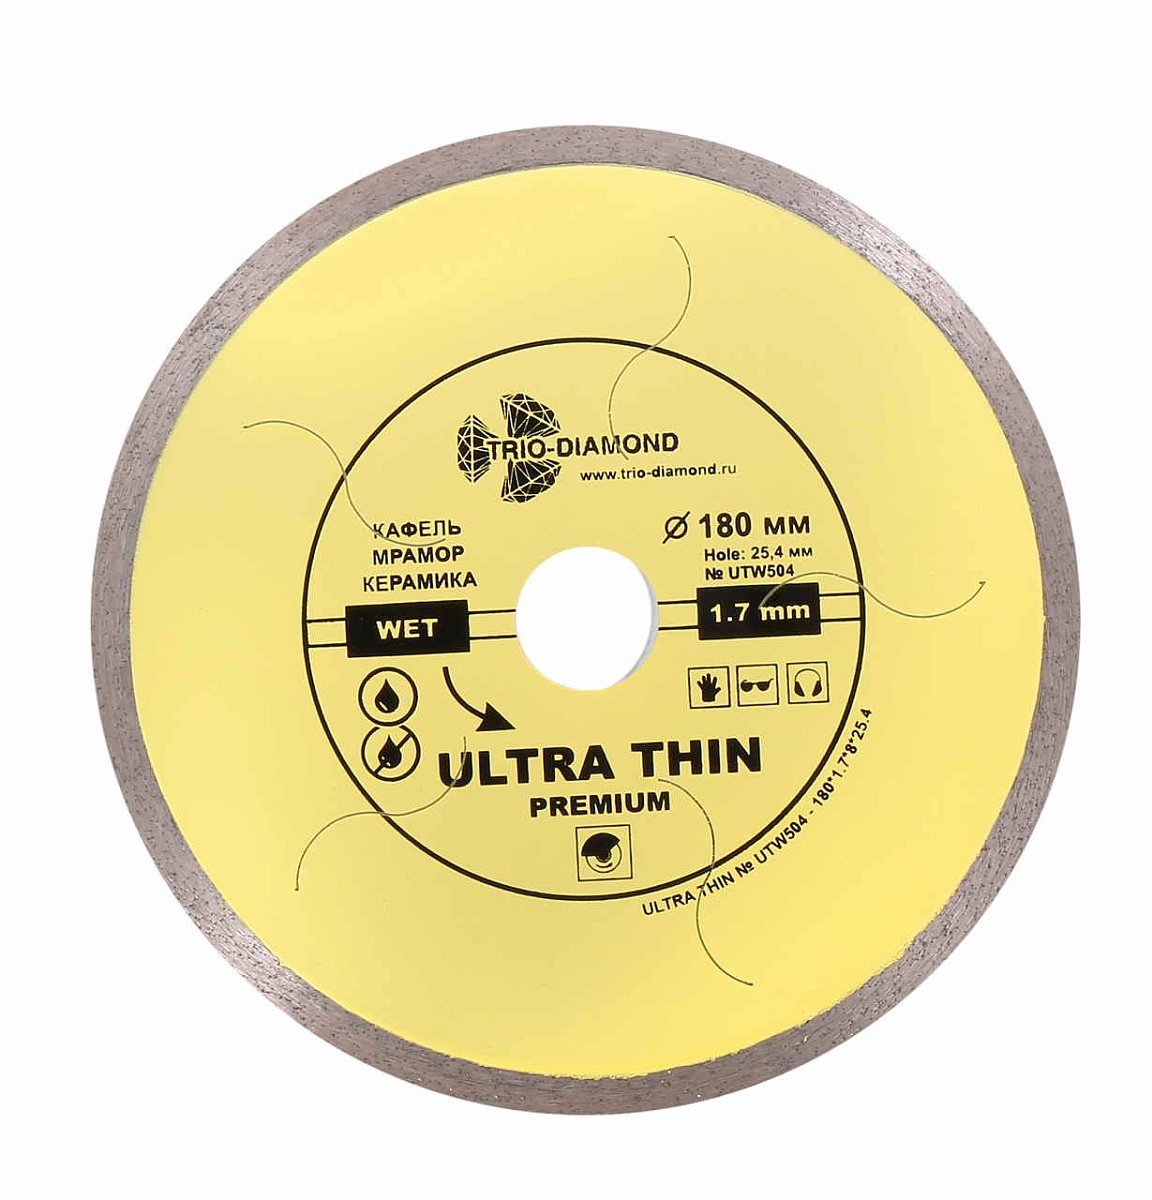 Trio-Diamond сплошной ультратонкий серия Ultra Thin Premium